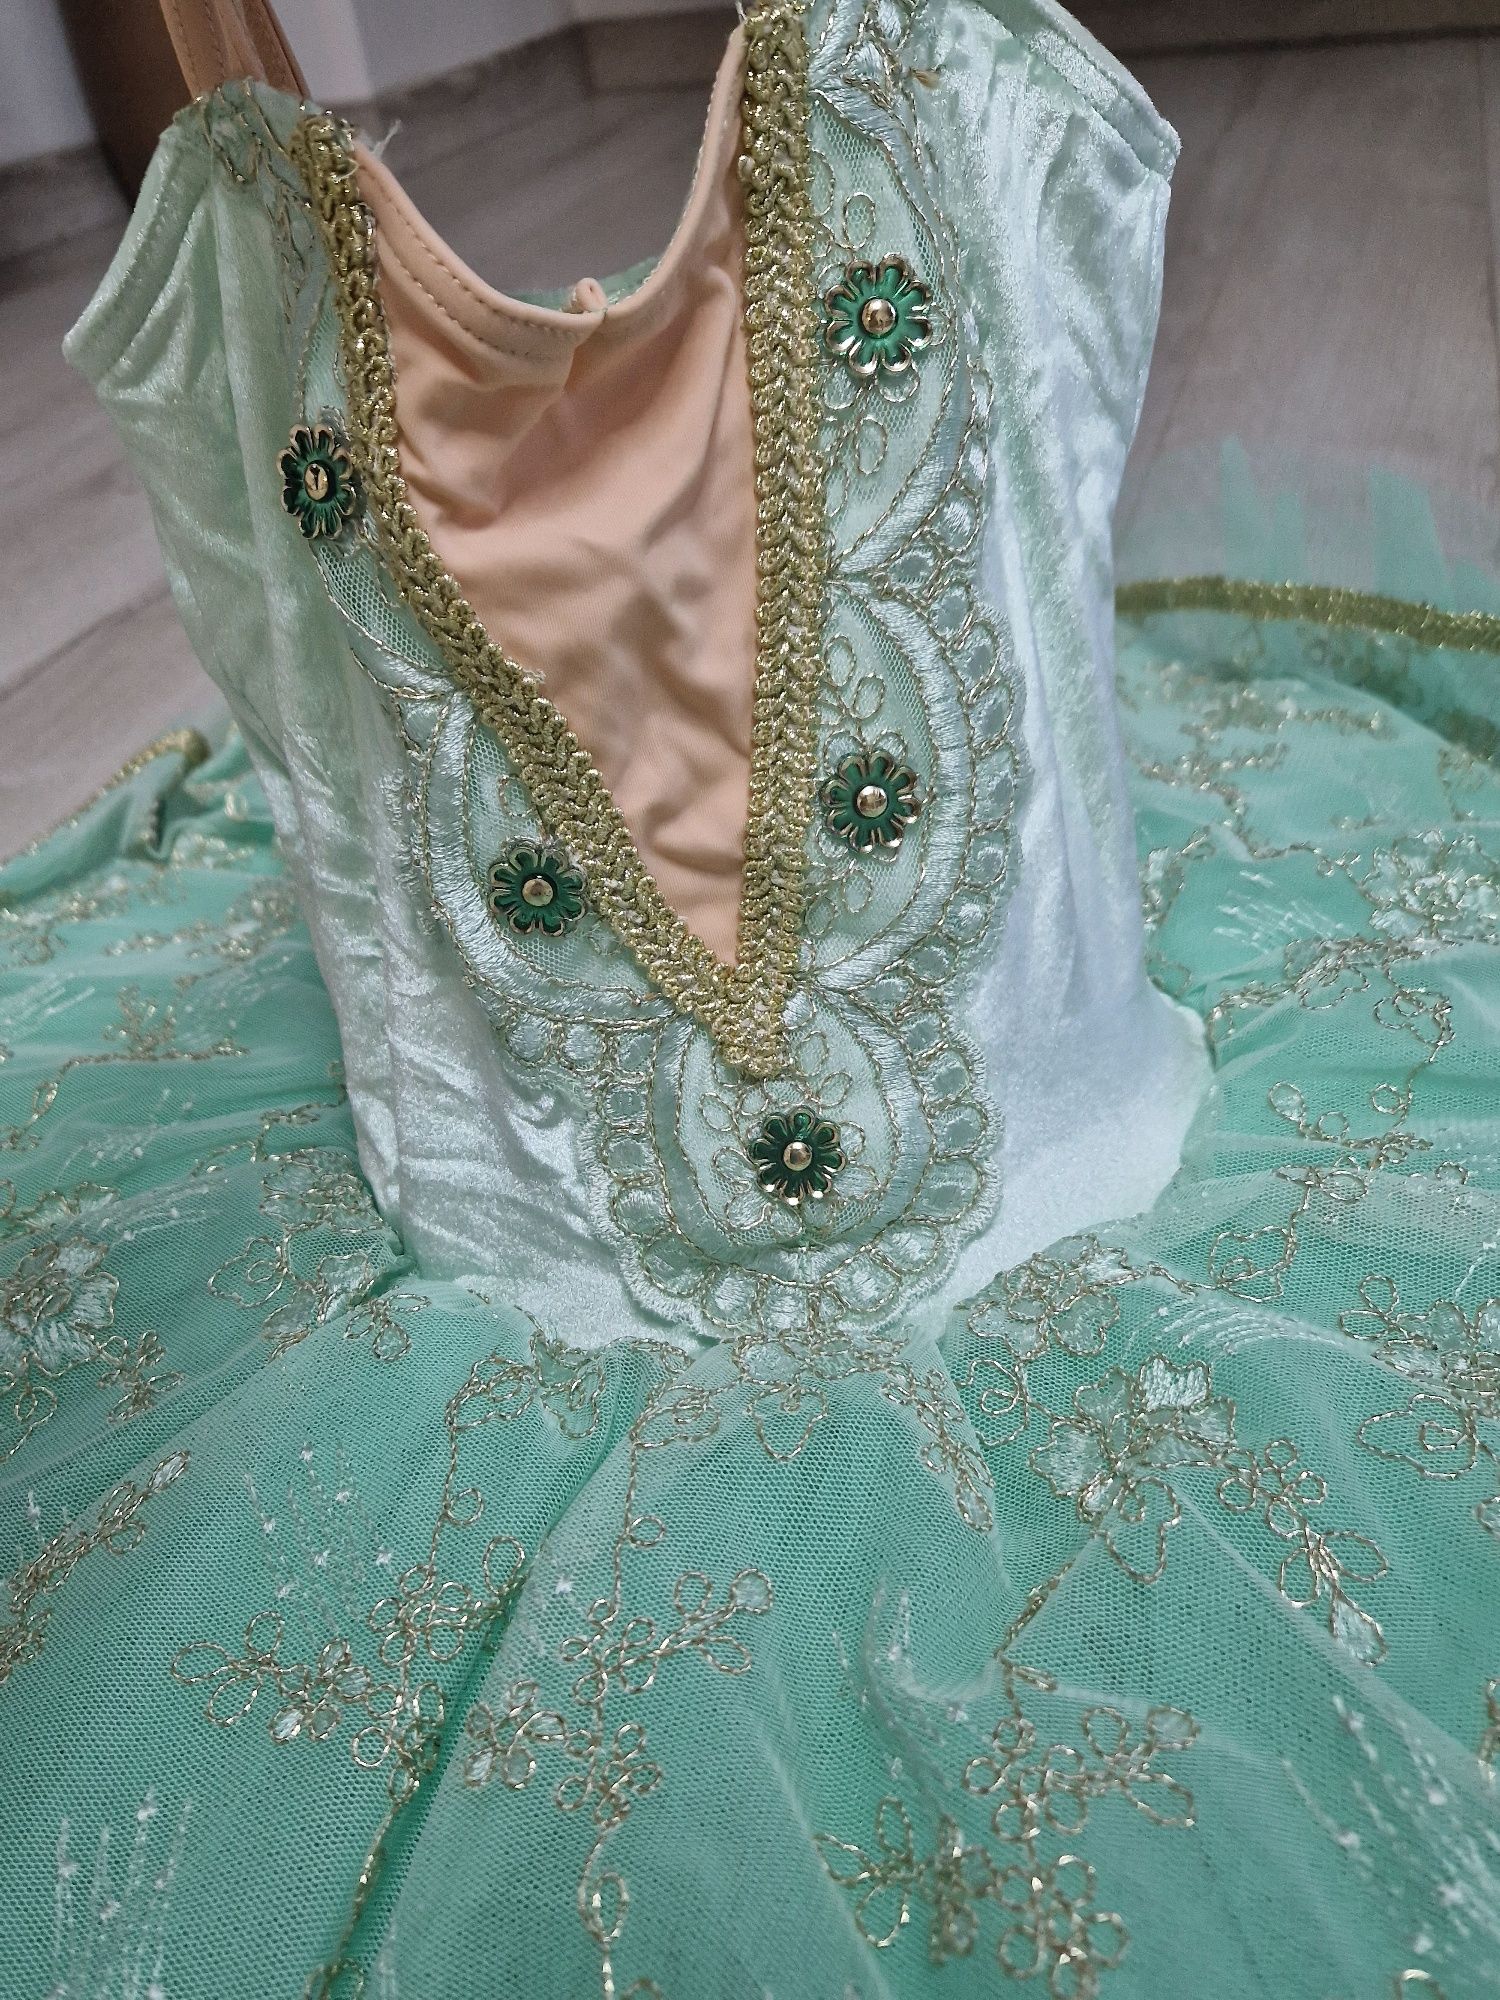 Costume balerina tutu